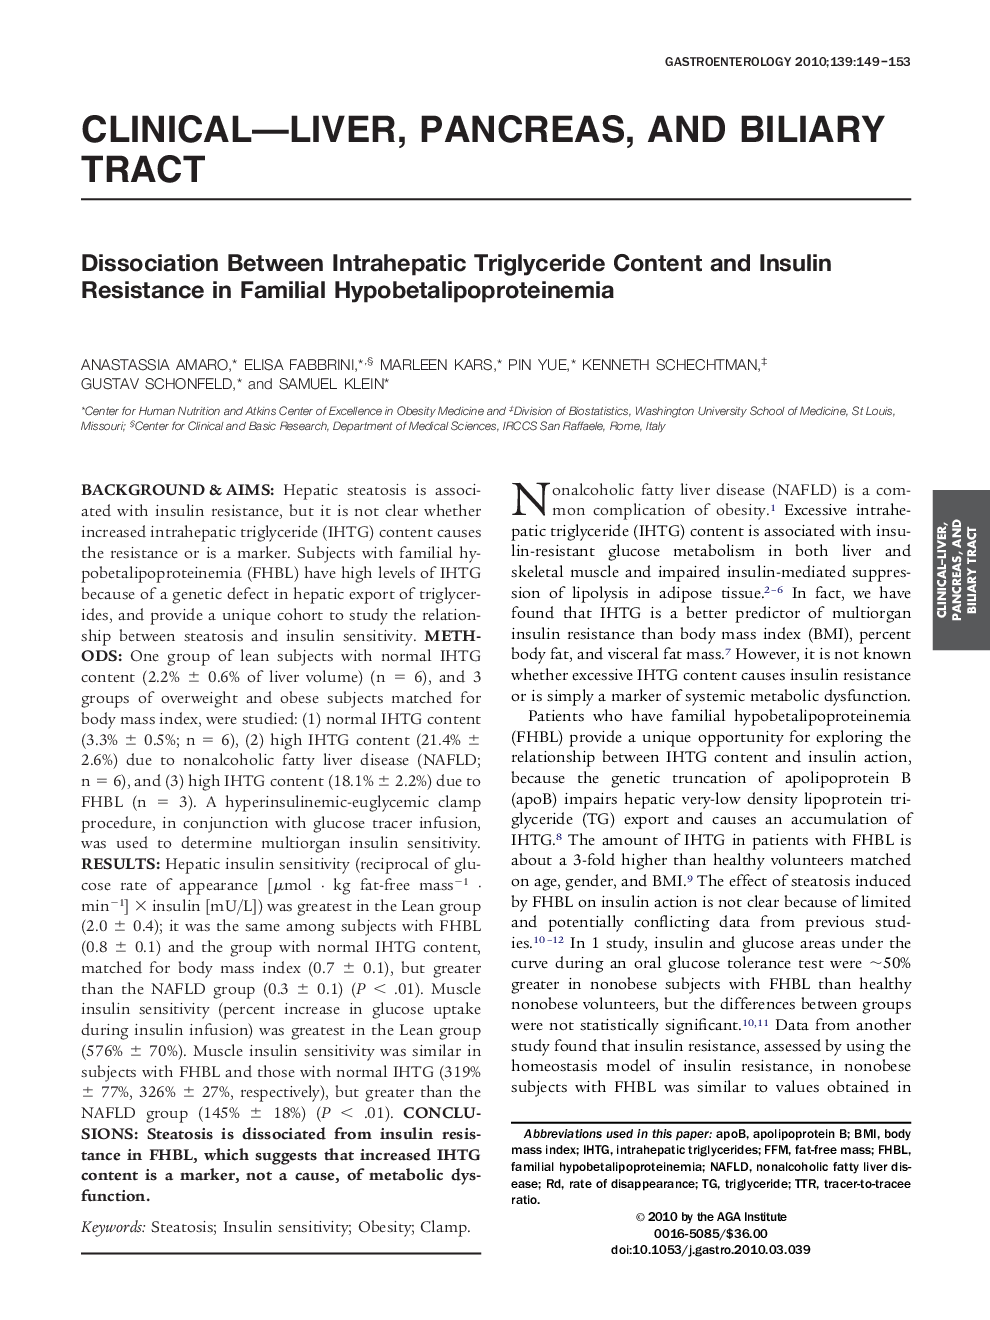 Dissociation Between Intrahepatic Triglyceride Content and Insulin Resistance in Familial Hypobetalipoproteinemia 